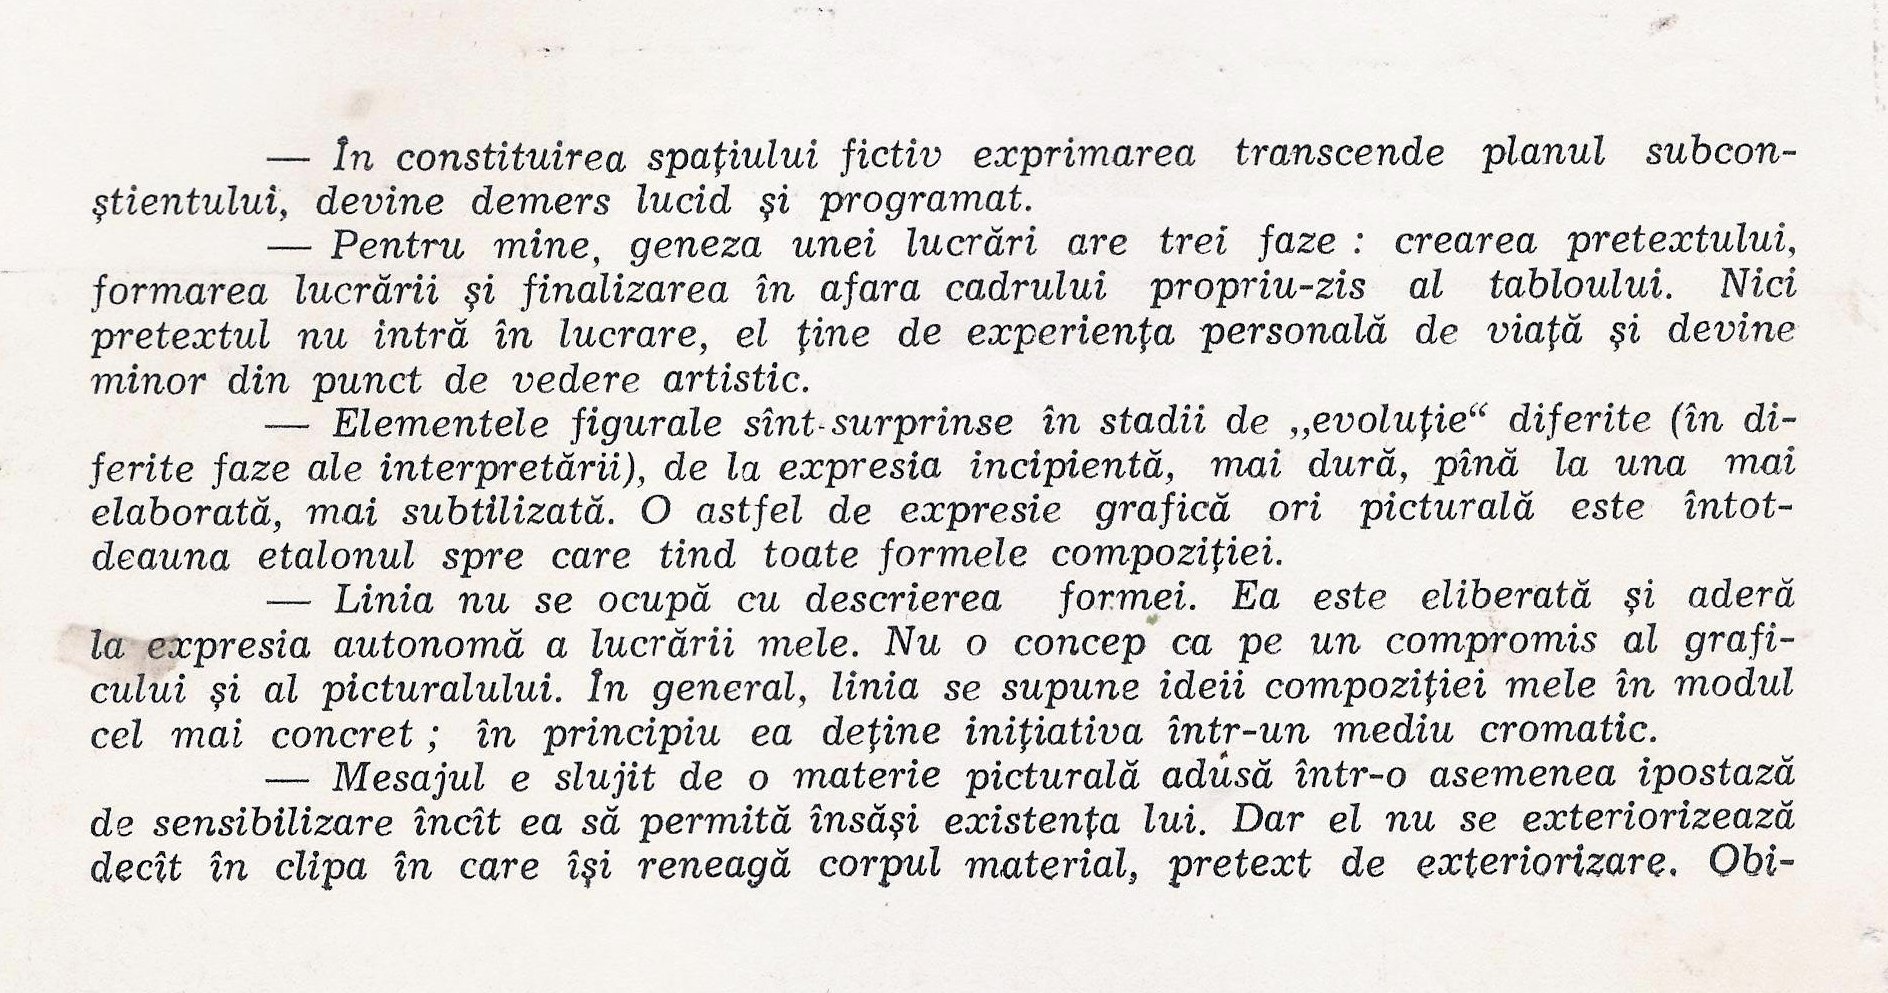 Alexandru CHIRA in Catalog expozitie Kalinderu 1972 pag. 2